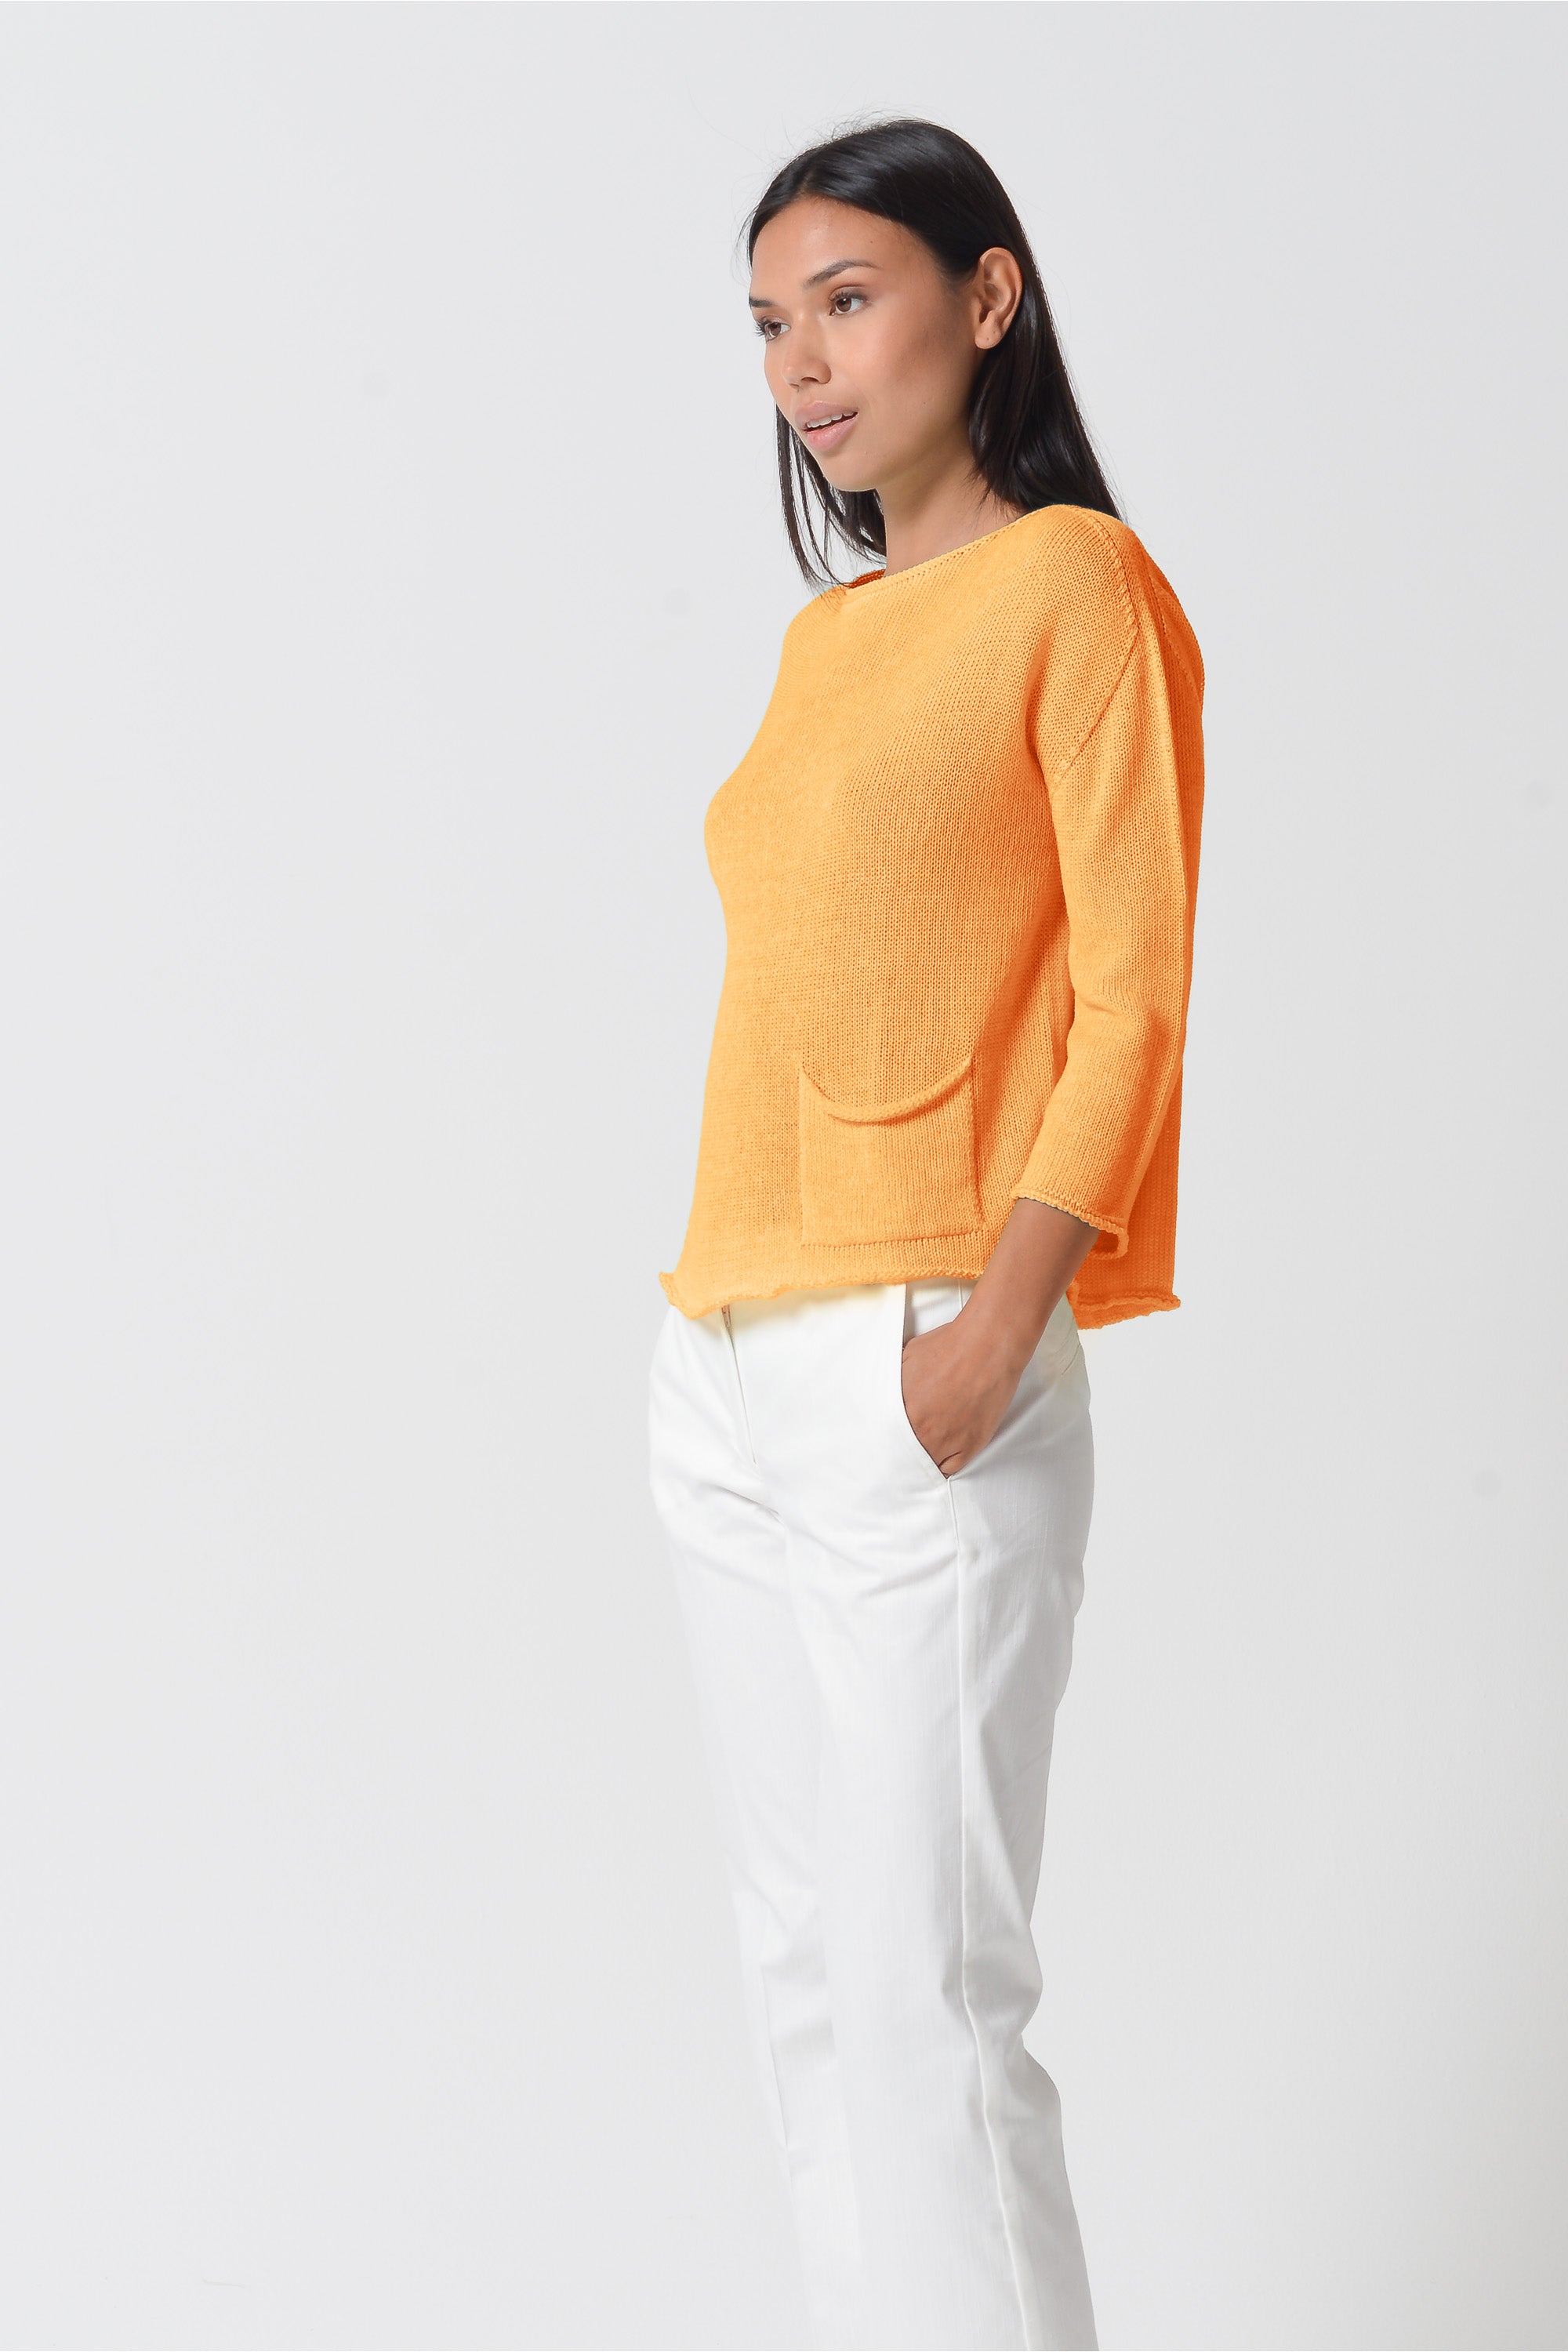 Sofia Knit - Short Sleeve Cotton Sweater - Apricot